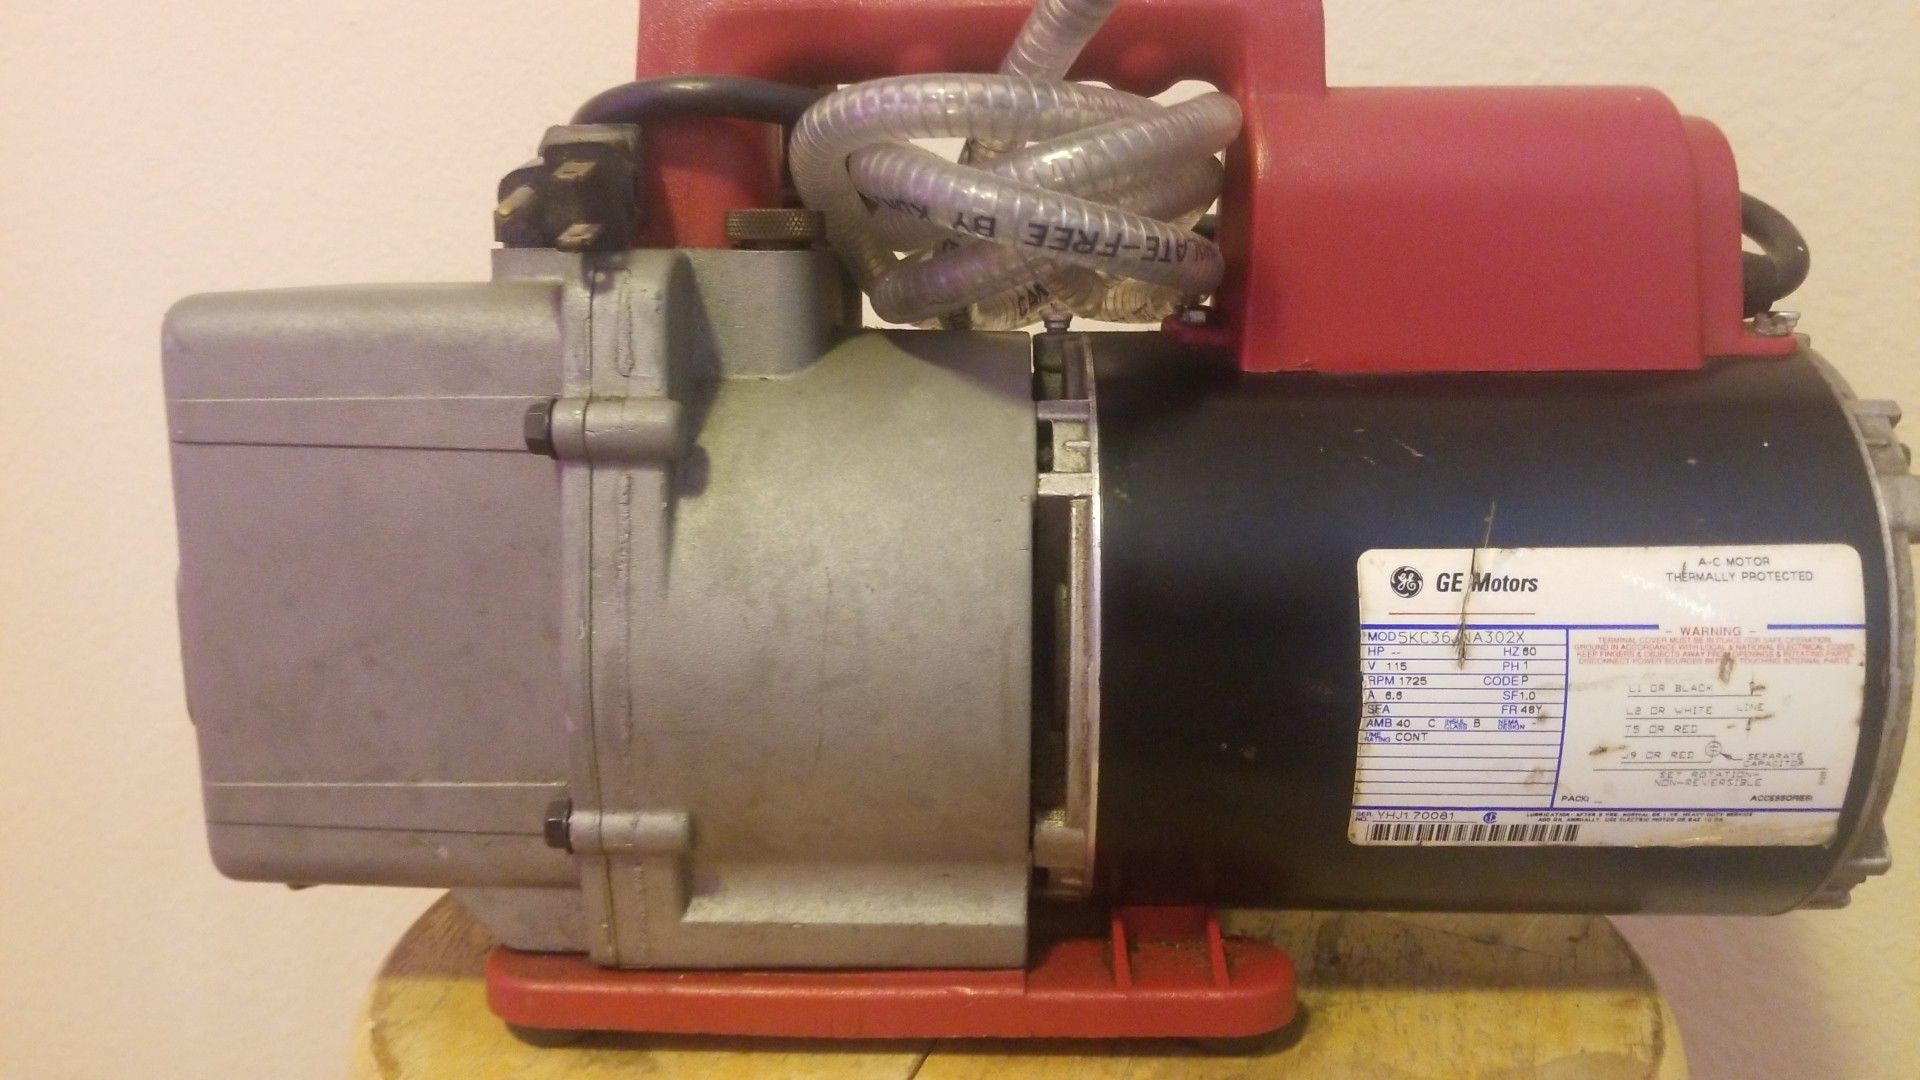 Robinair vacumaster high performance vacuum pump